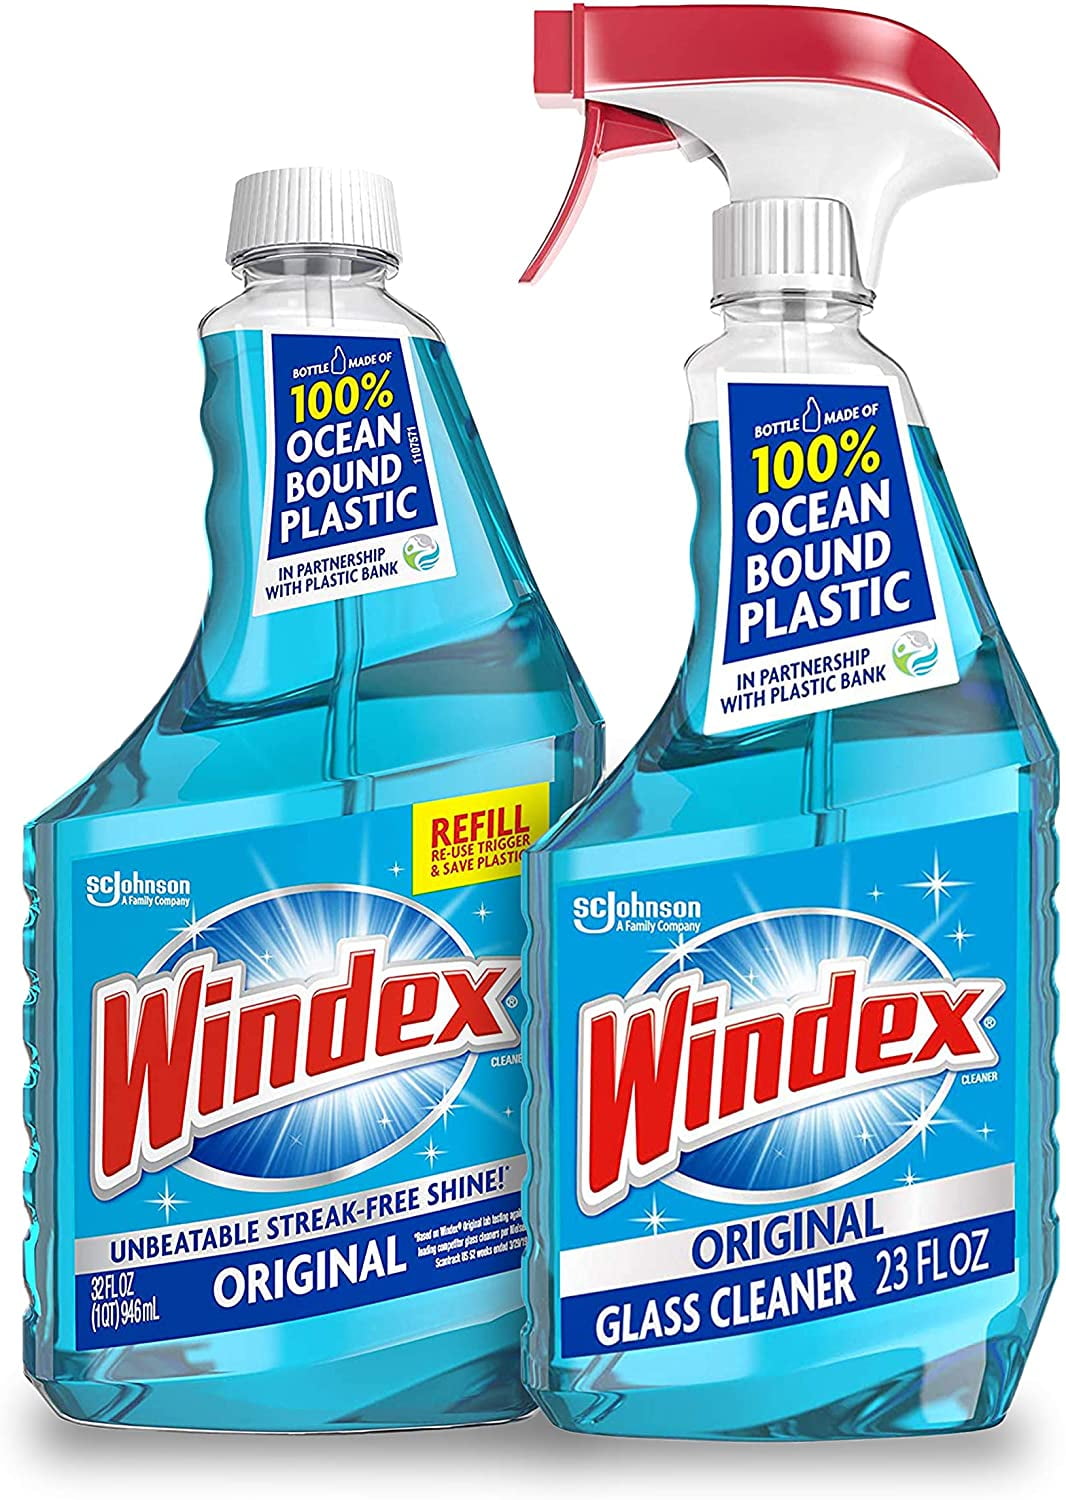 Windex Original Blue Glass And Window Cleaner Bundle Includes A 23 Fl